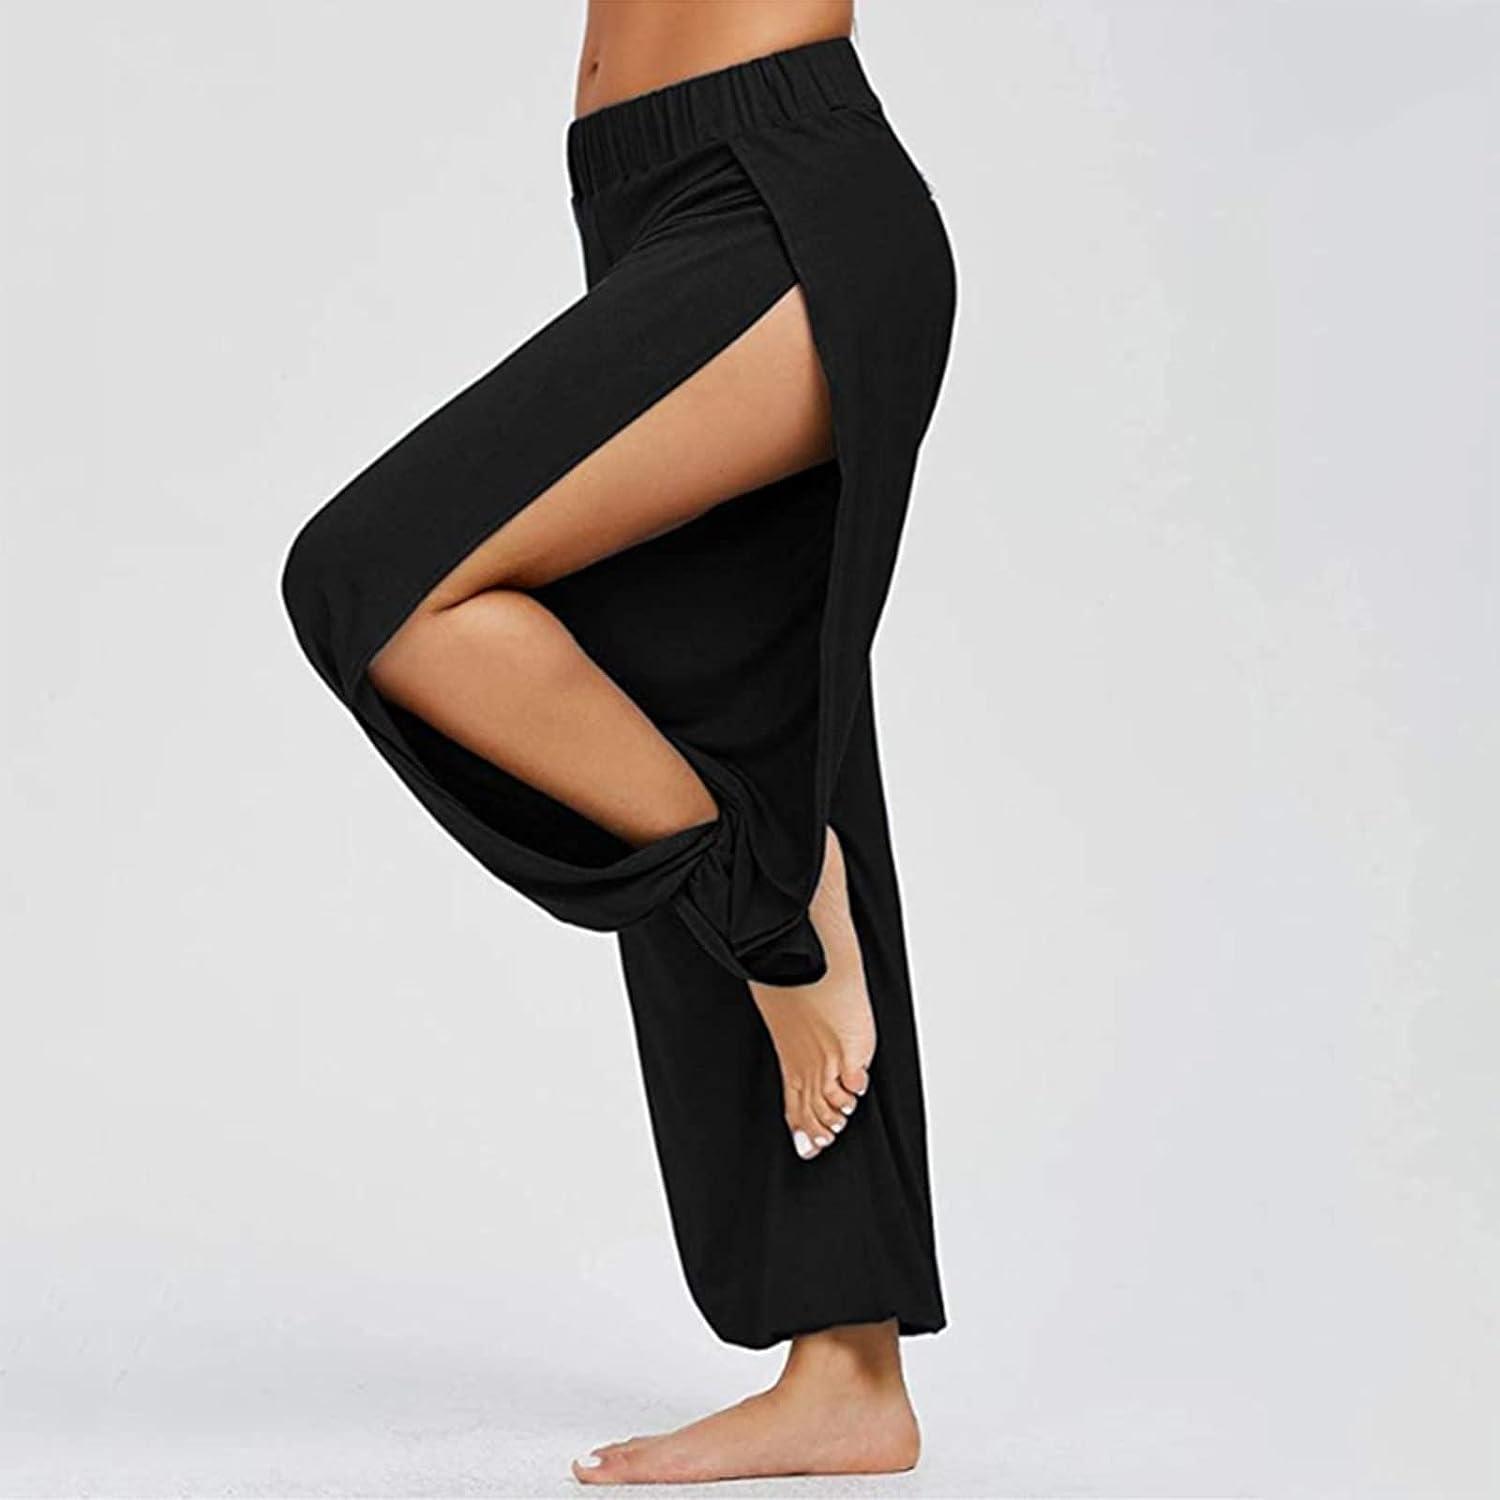 High Slit Harem Pants for Women Hippie Harem Yoga Pants Trousers